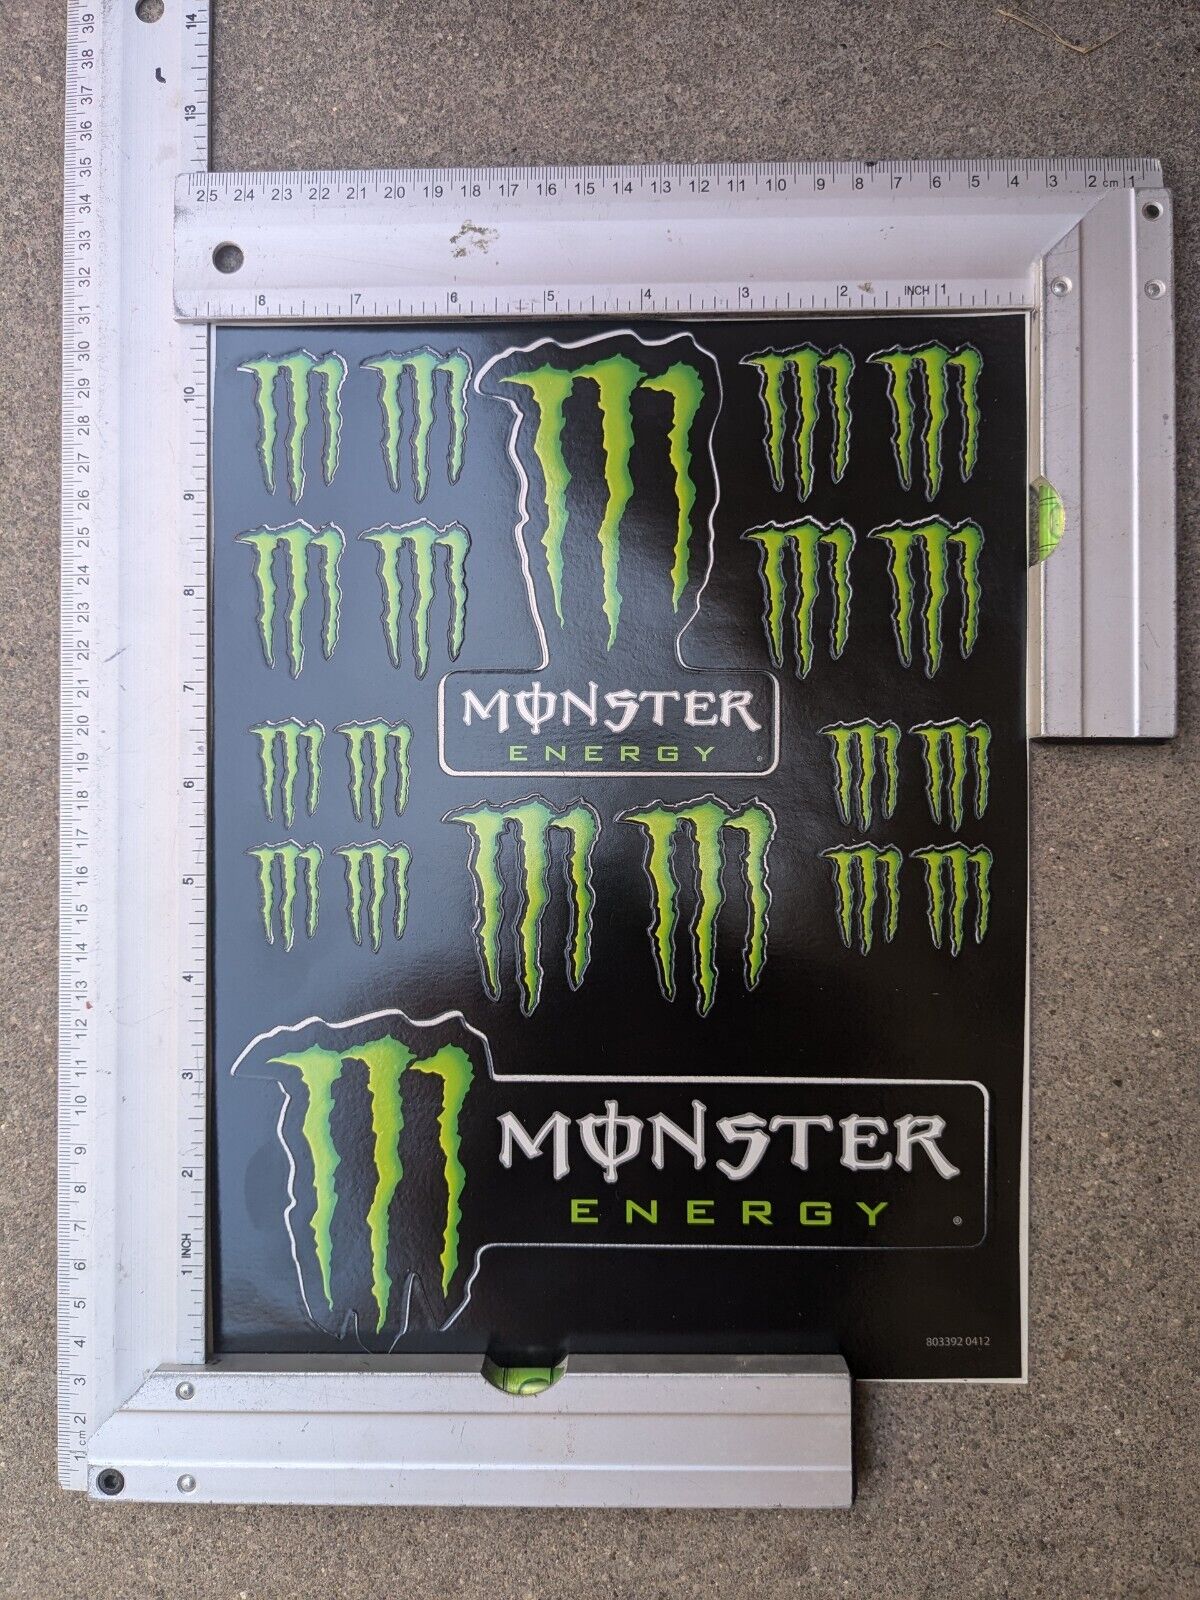 RARE Monster Energy Sticker Decal Lot NEW - Rare Sheet of 20